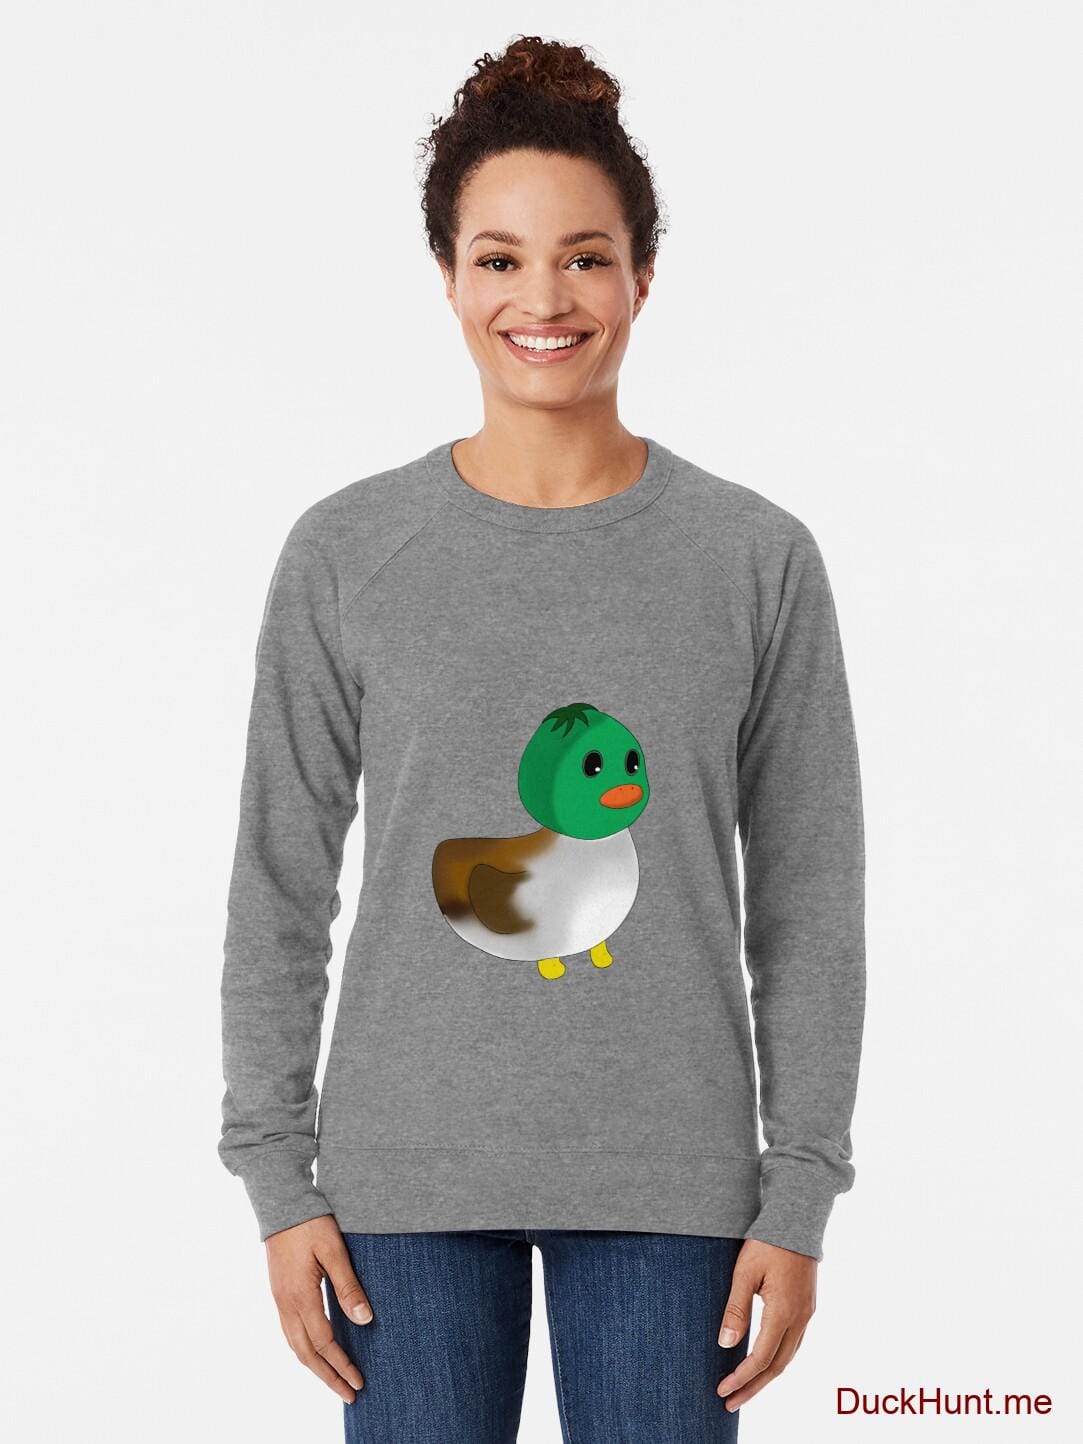 Normal Duck Grey Lightweight Sweatshirt alternative image 1